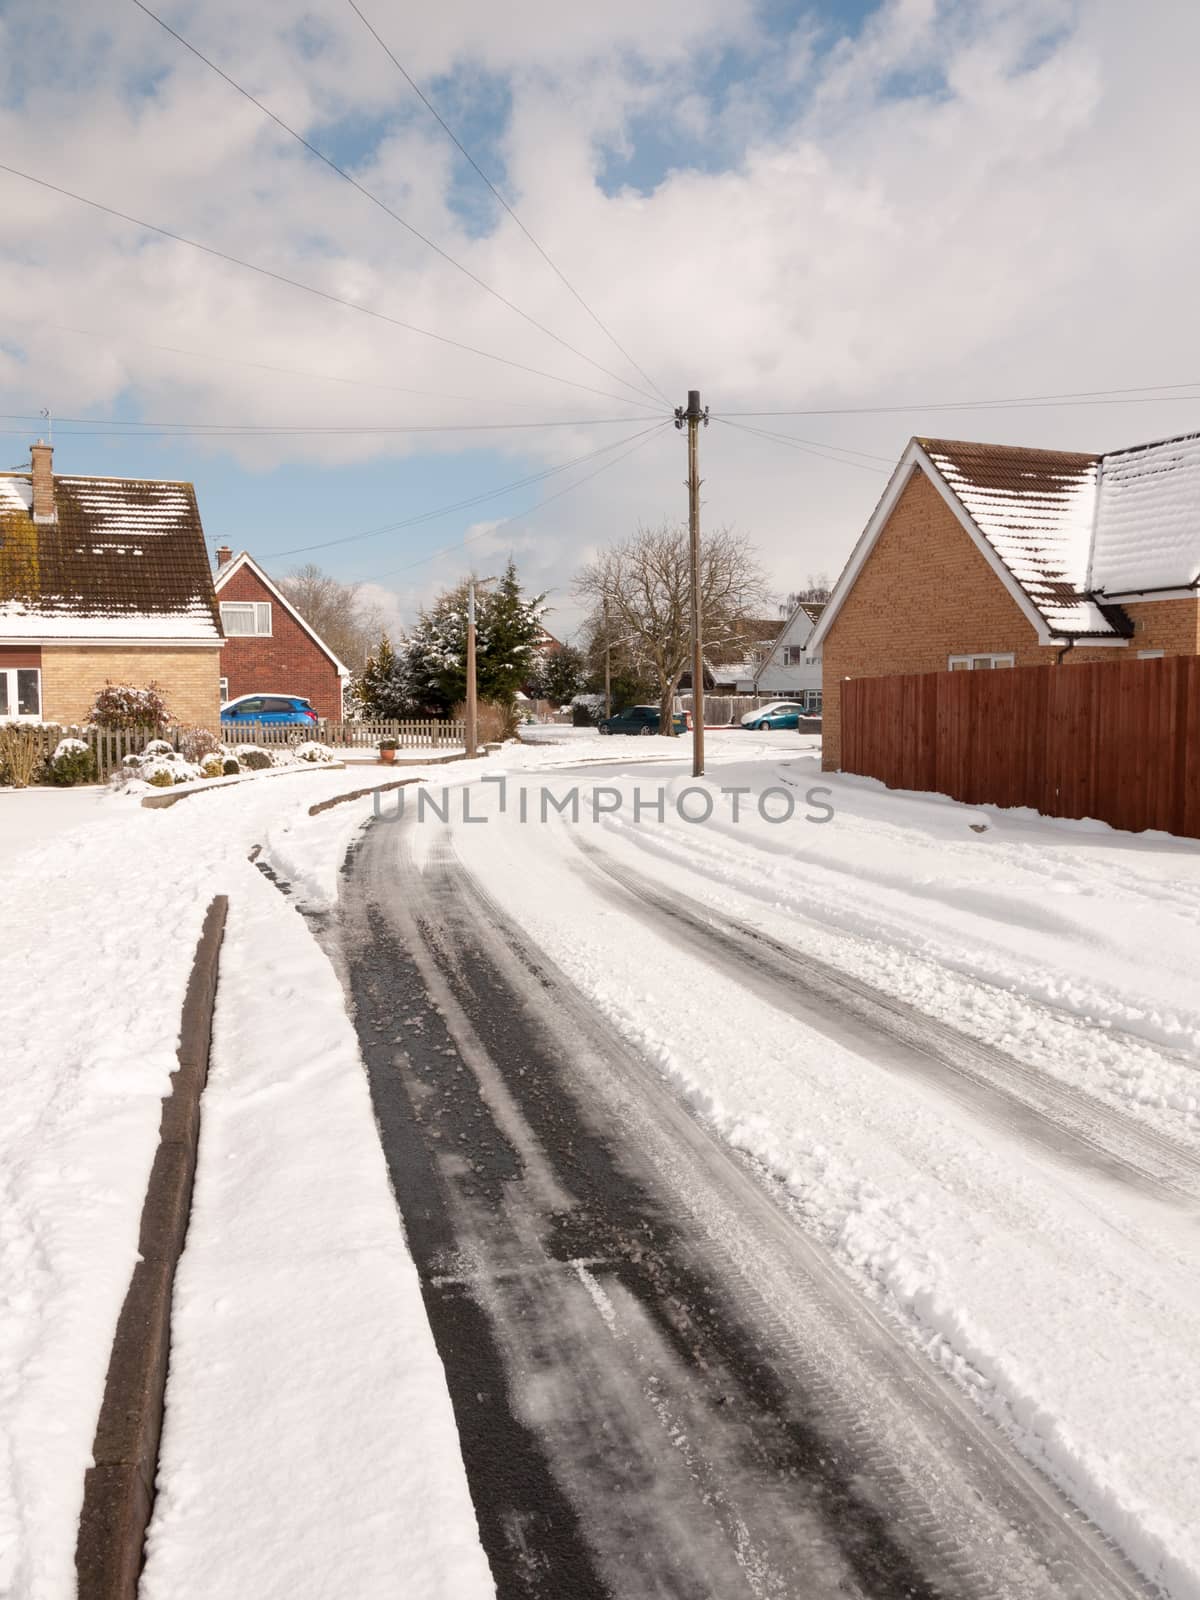 winter road through uk estate tracks no cars empty path snow by callumrc